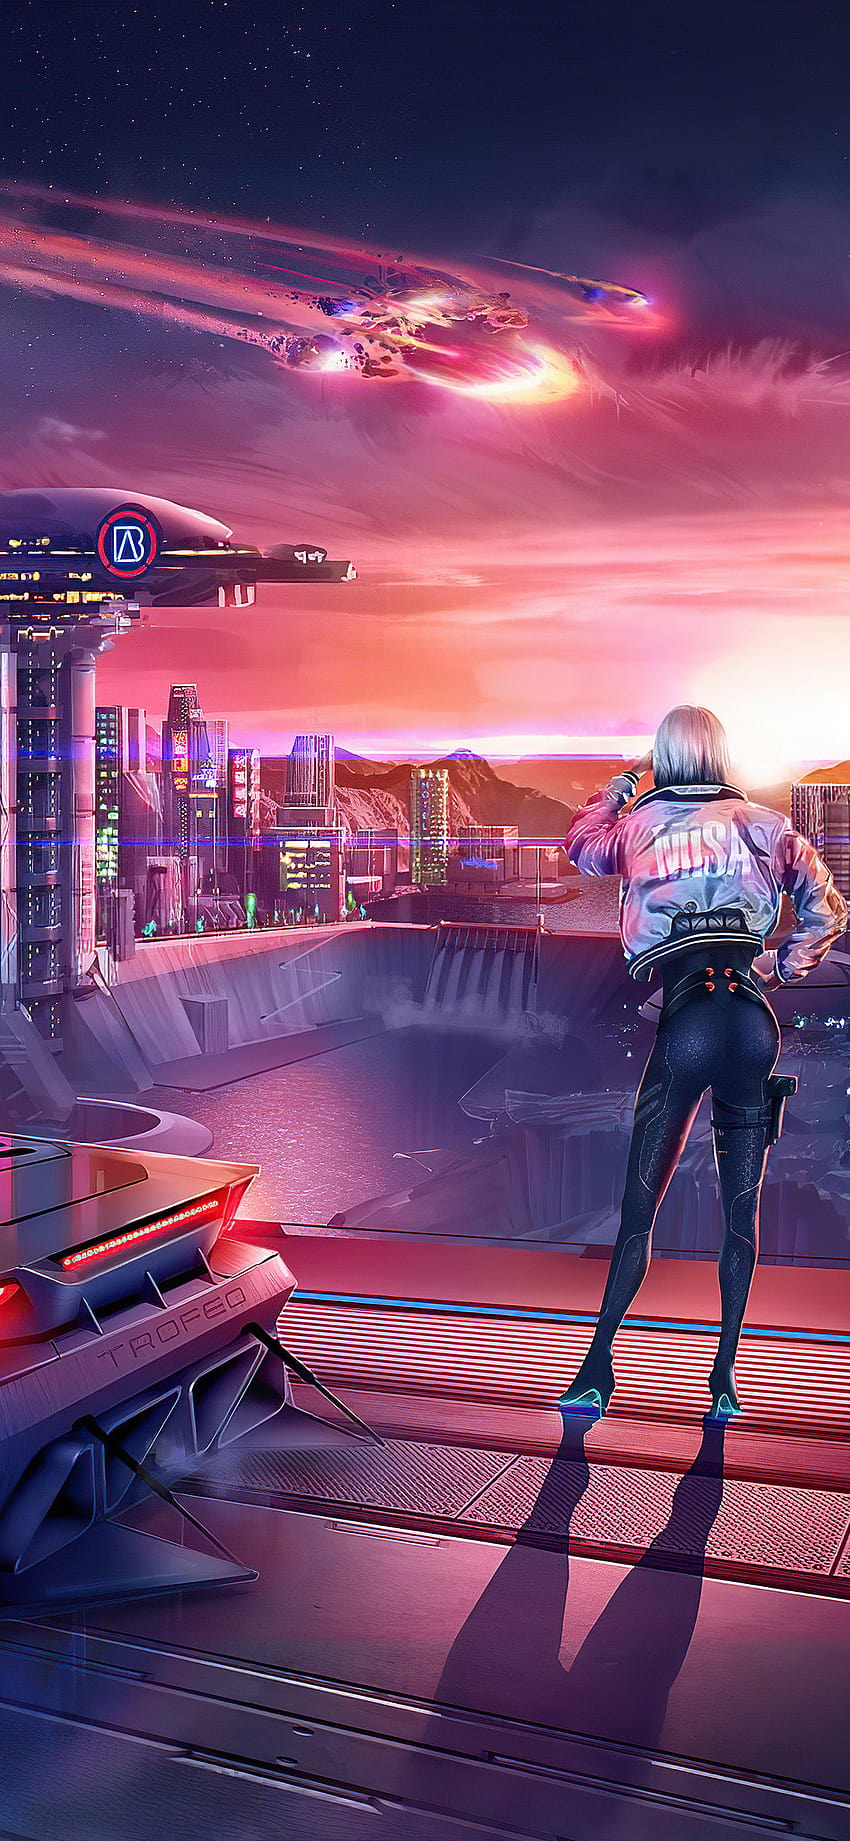 Premium Photo | City wallpaper dystopian futuristic cyberpunk city at night  3d rendering raster illustration